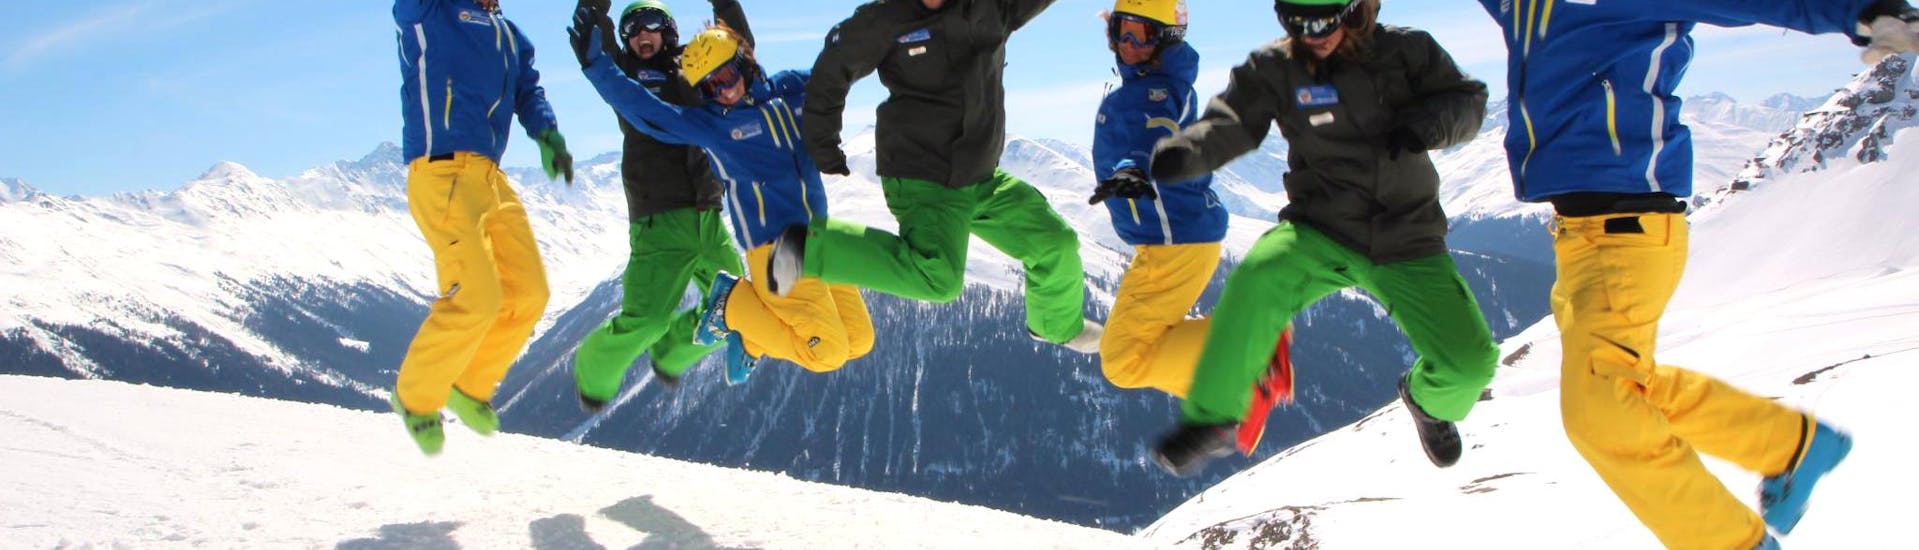 Kids Ski Lessons (14-17 y.) for Advanced Skiers with Swiss Ski School Davos - Hero image